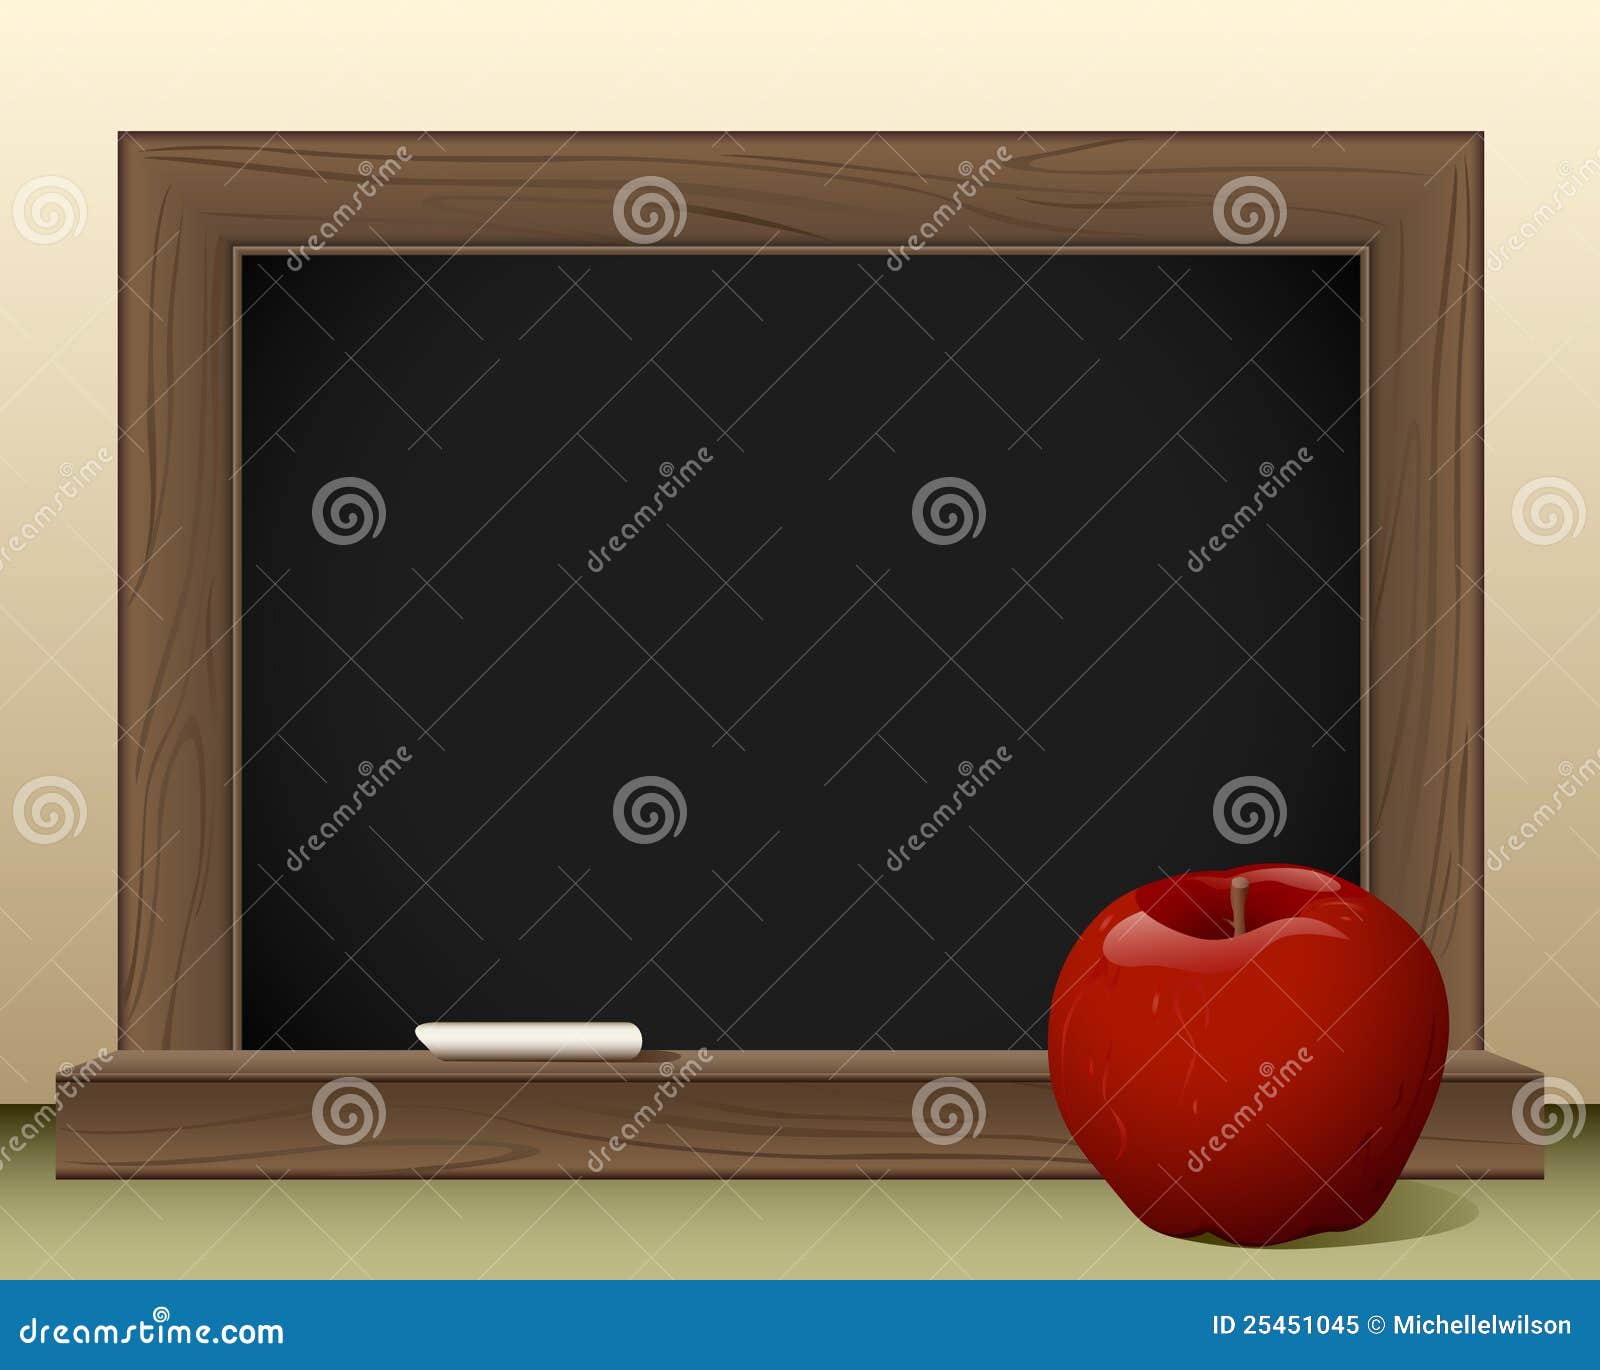 Chalkboard and apple stock vector. Illustration of blackboard - 25451045